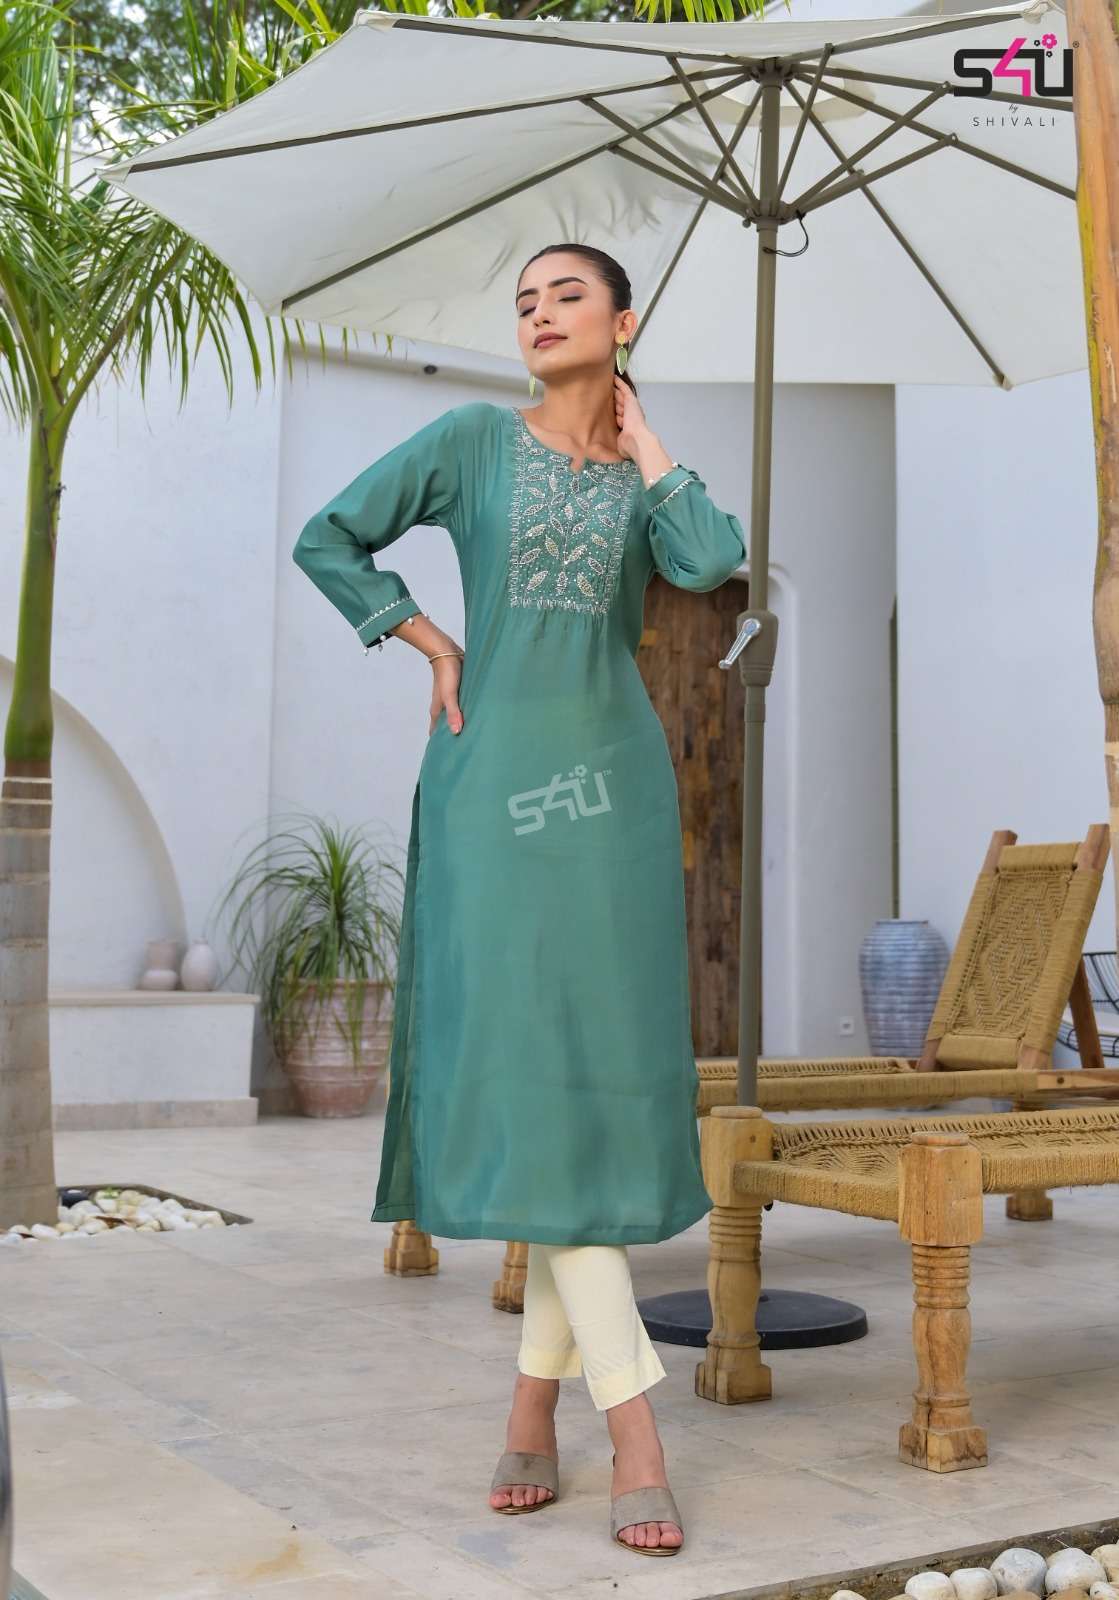 S4U Glamour By Shivali Ethnic Wear Straight Kurti Catalog Suppliers